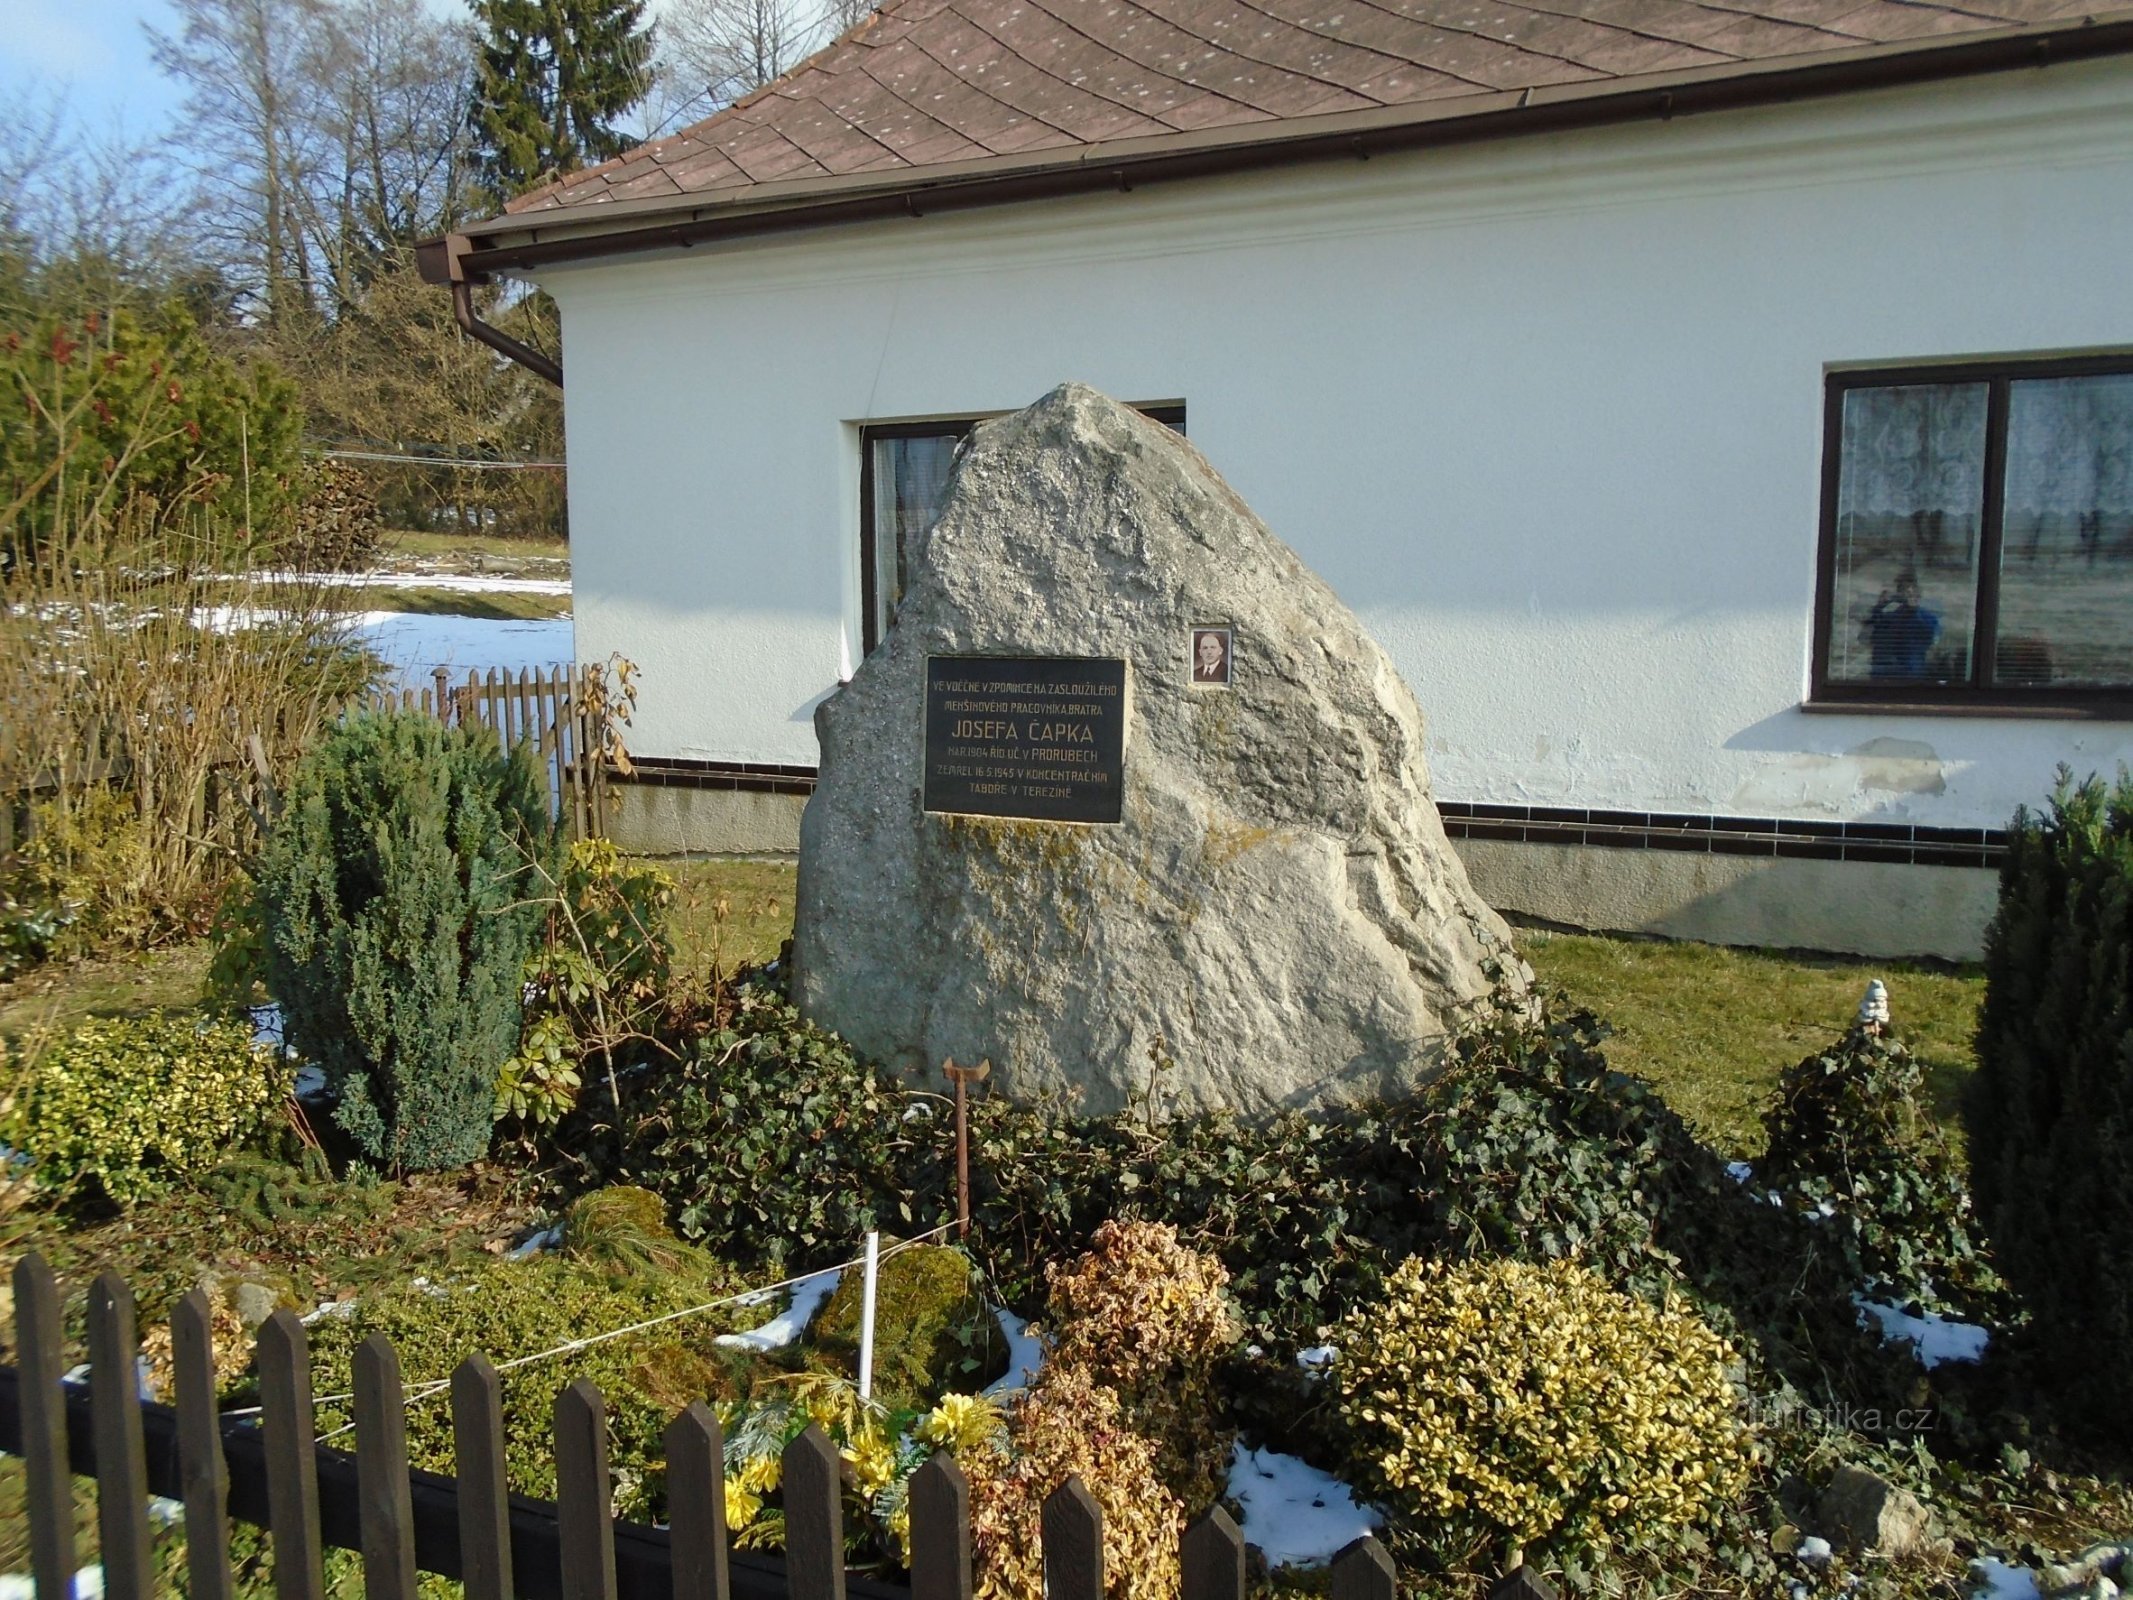 Monumento a J. Čapek (Proruby, 21.2.2018/XNUMX/XNUMX)